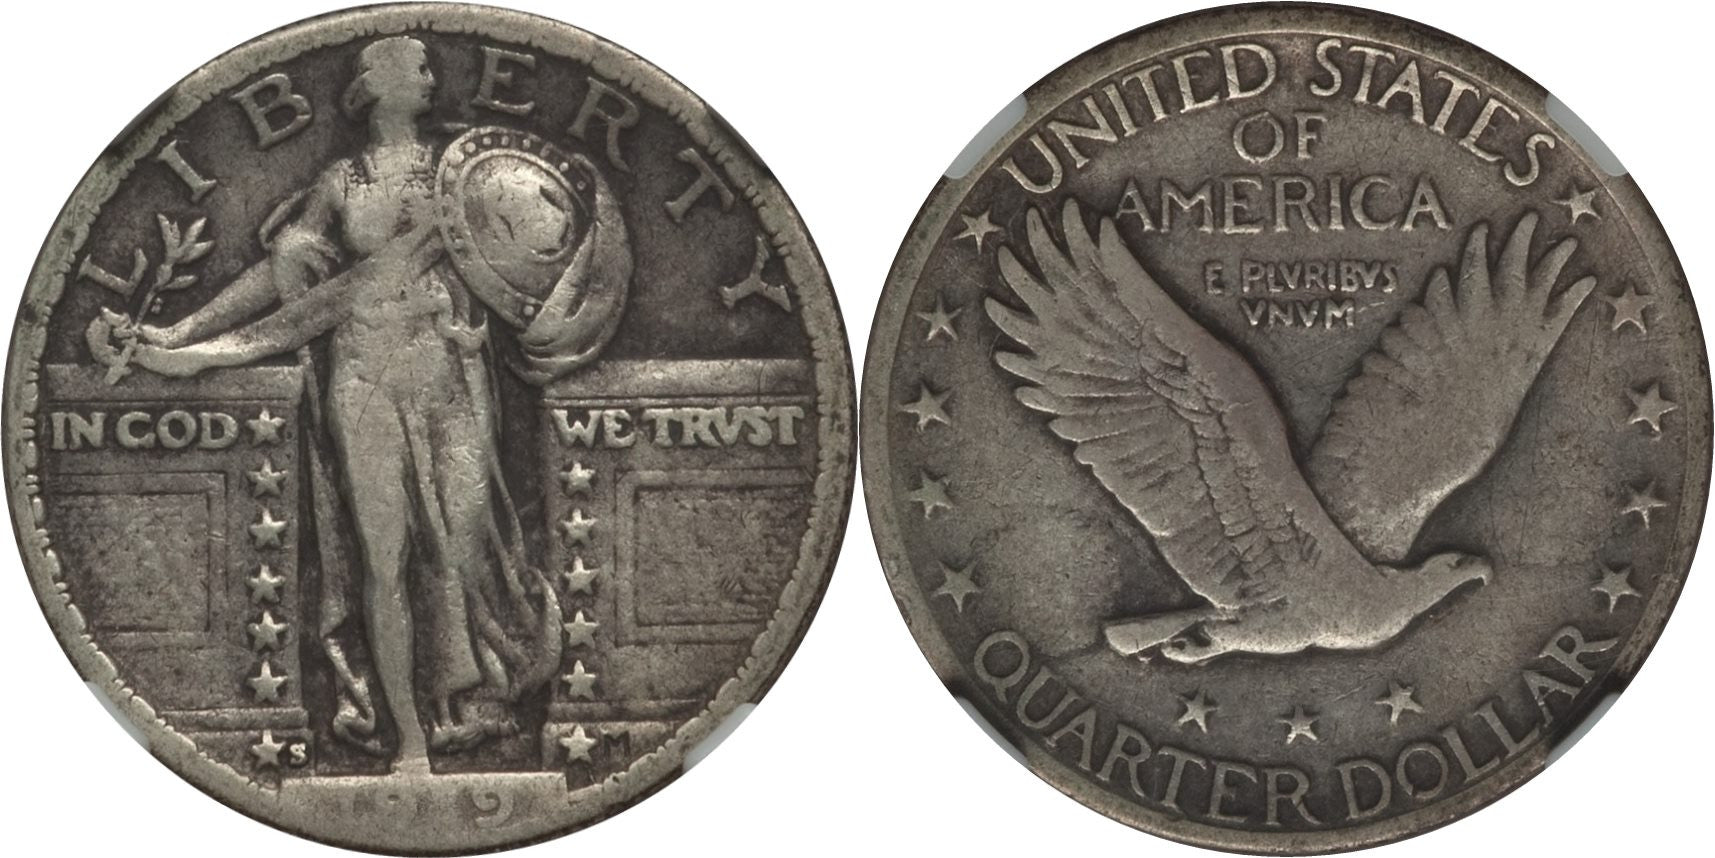 Coin Collecting 101 - The U.S. Standing Liberty Quarter - Original